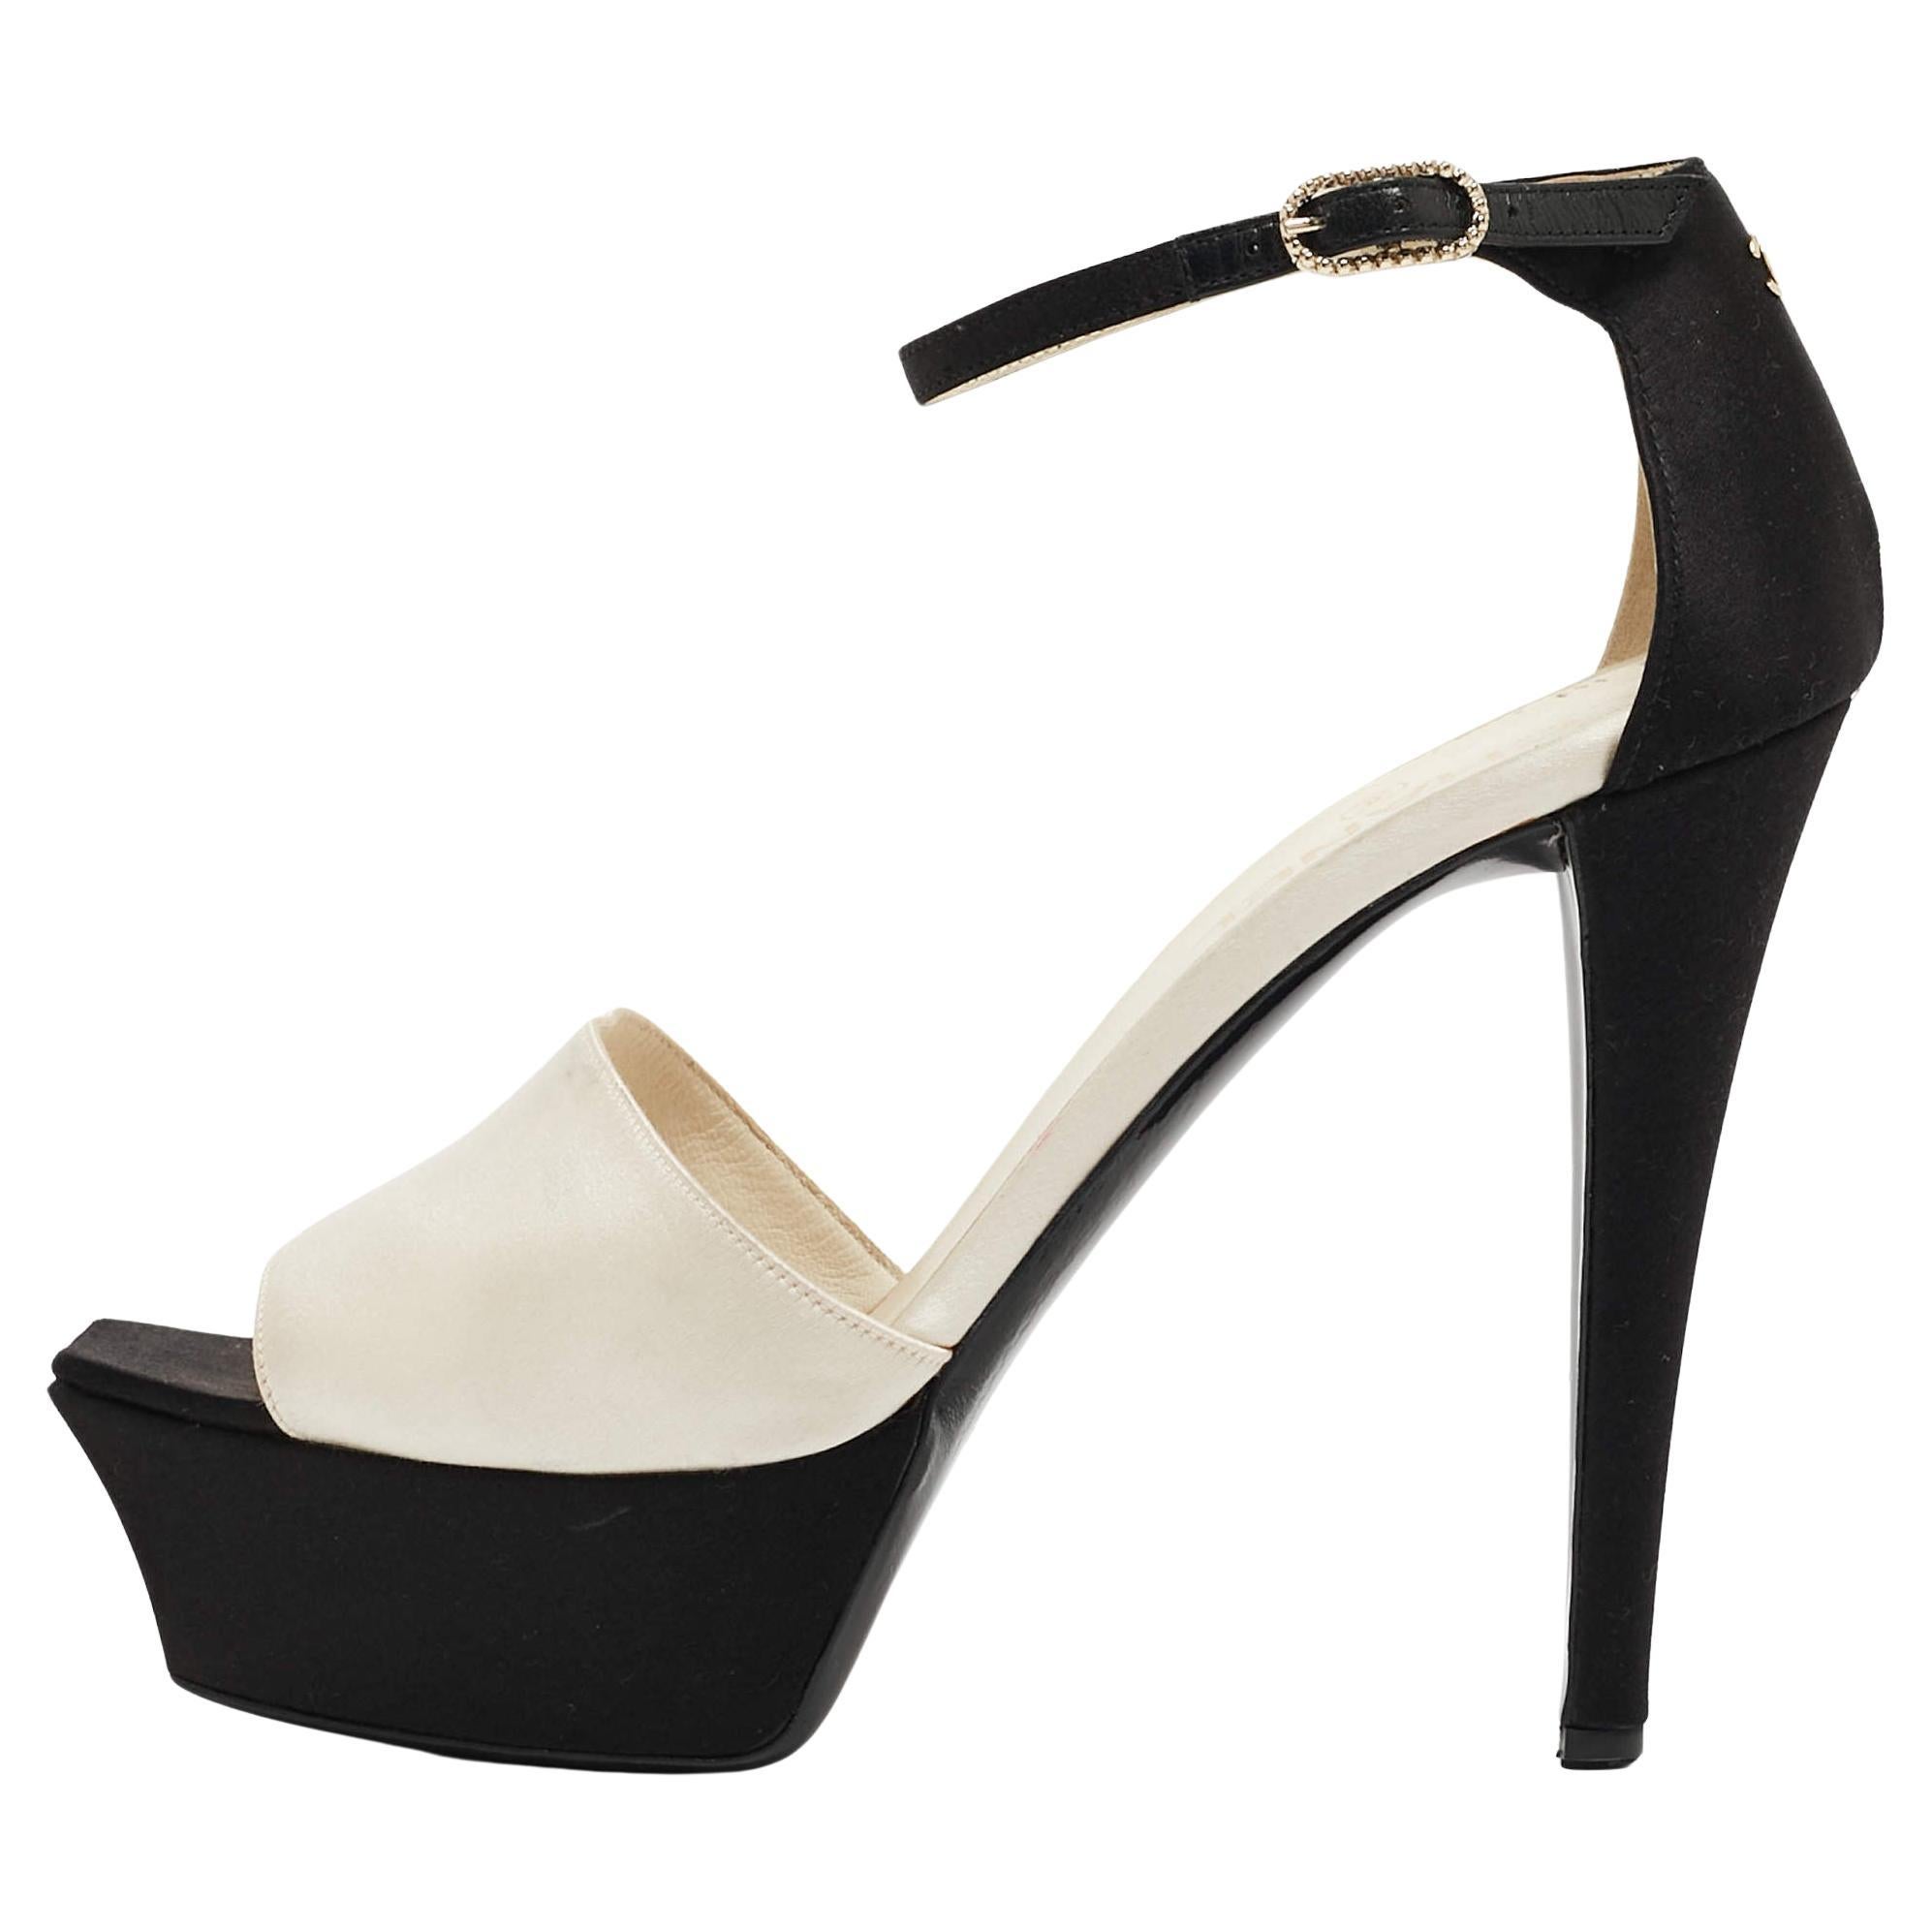  Chanel - Sandales peep toes en satin blanc/noir - Taille 39,5 en vente